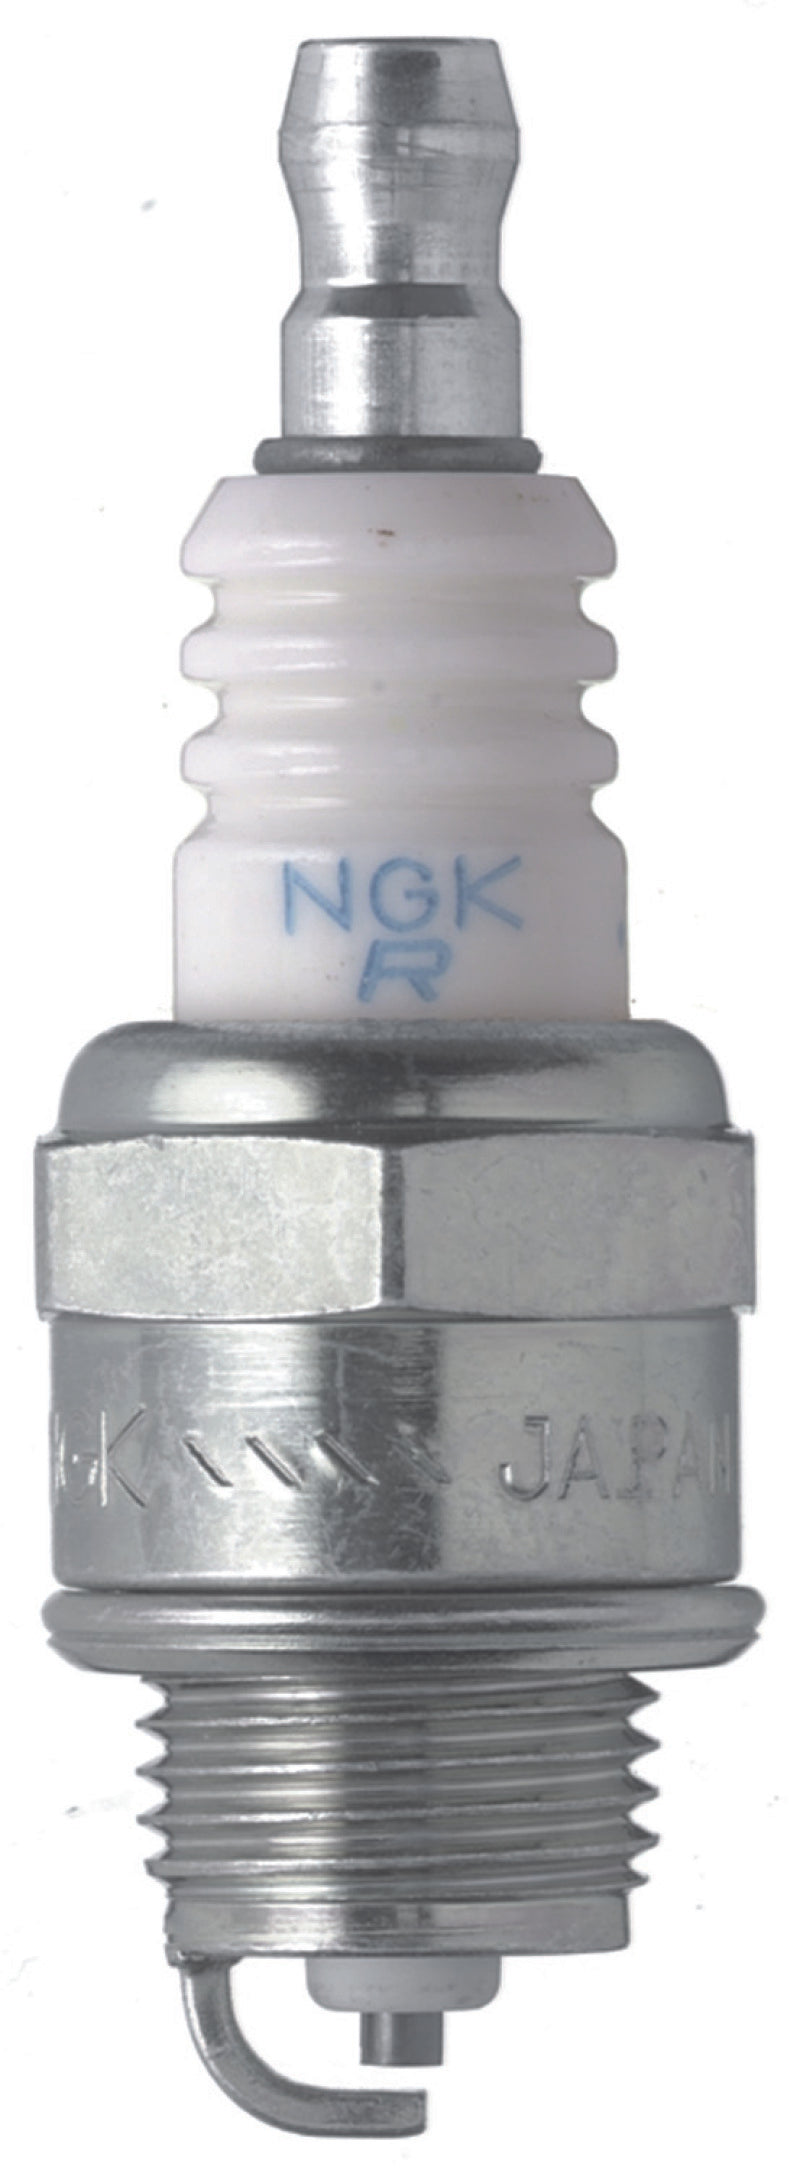 NGK BLYB Spark Plug Box of 6 (BPMR6A)